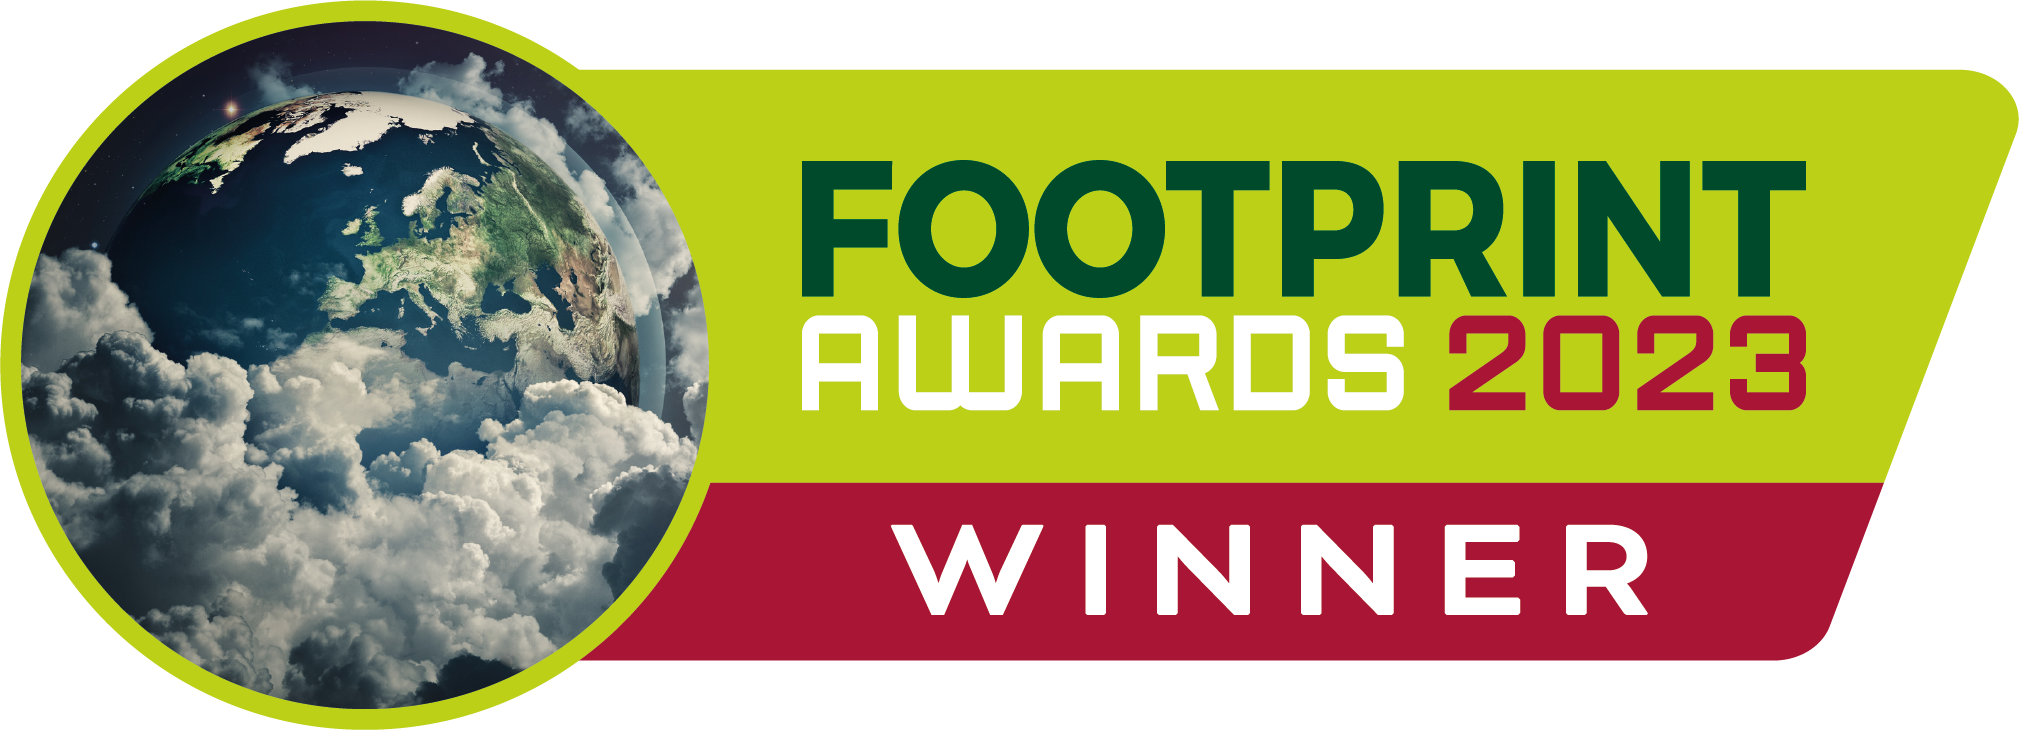 Footprint awards logo